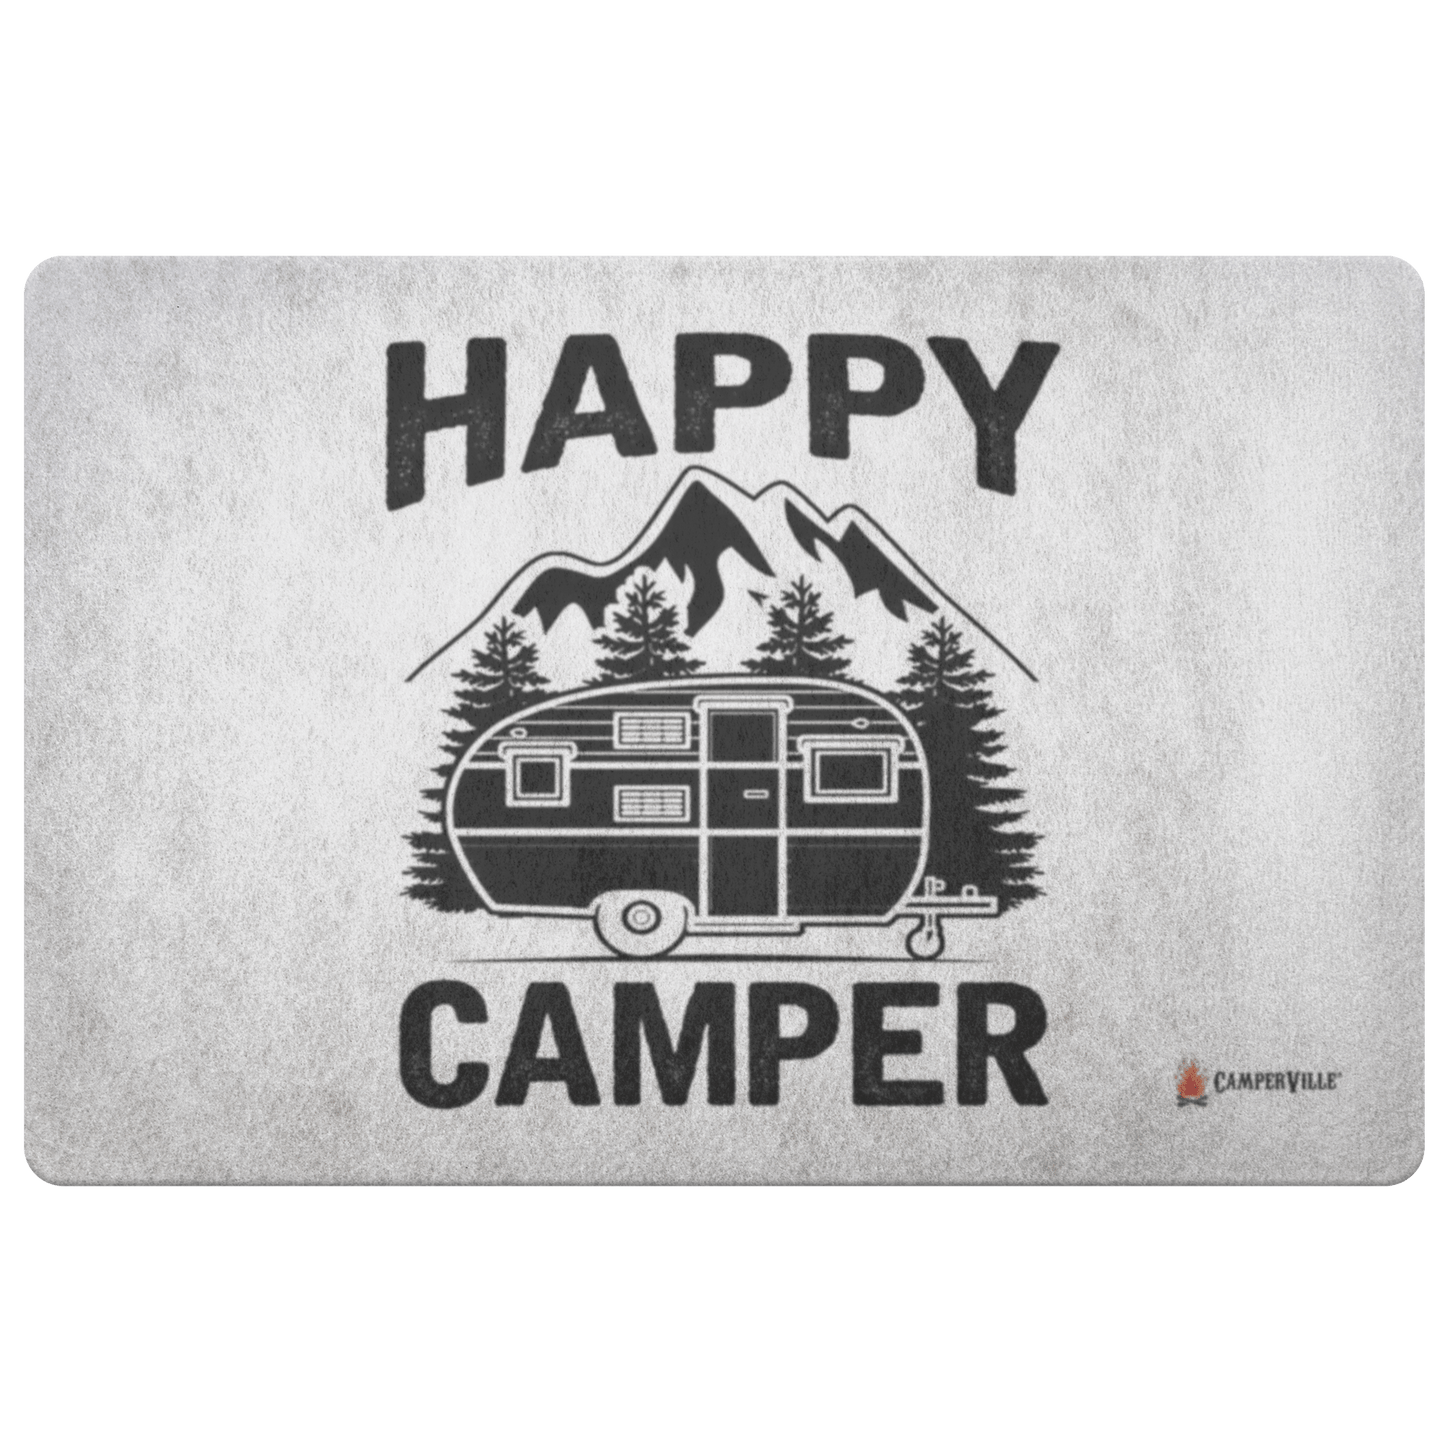 Official Camperville "Happy Camper" Doormat